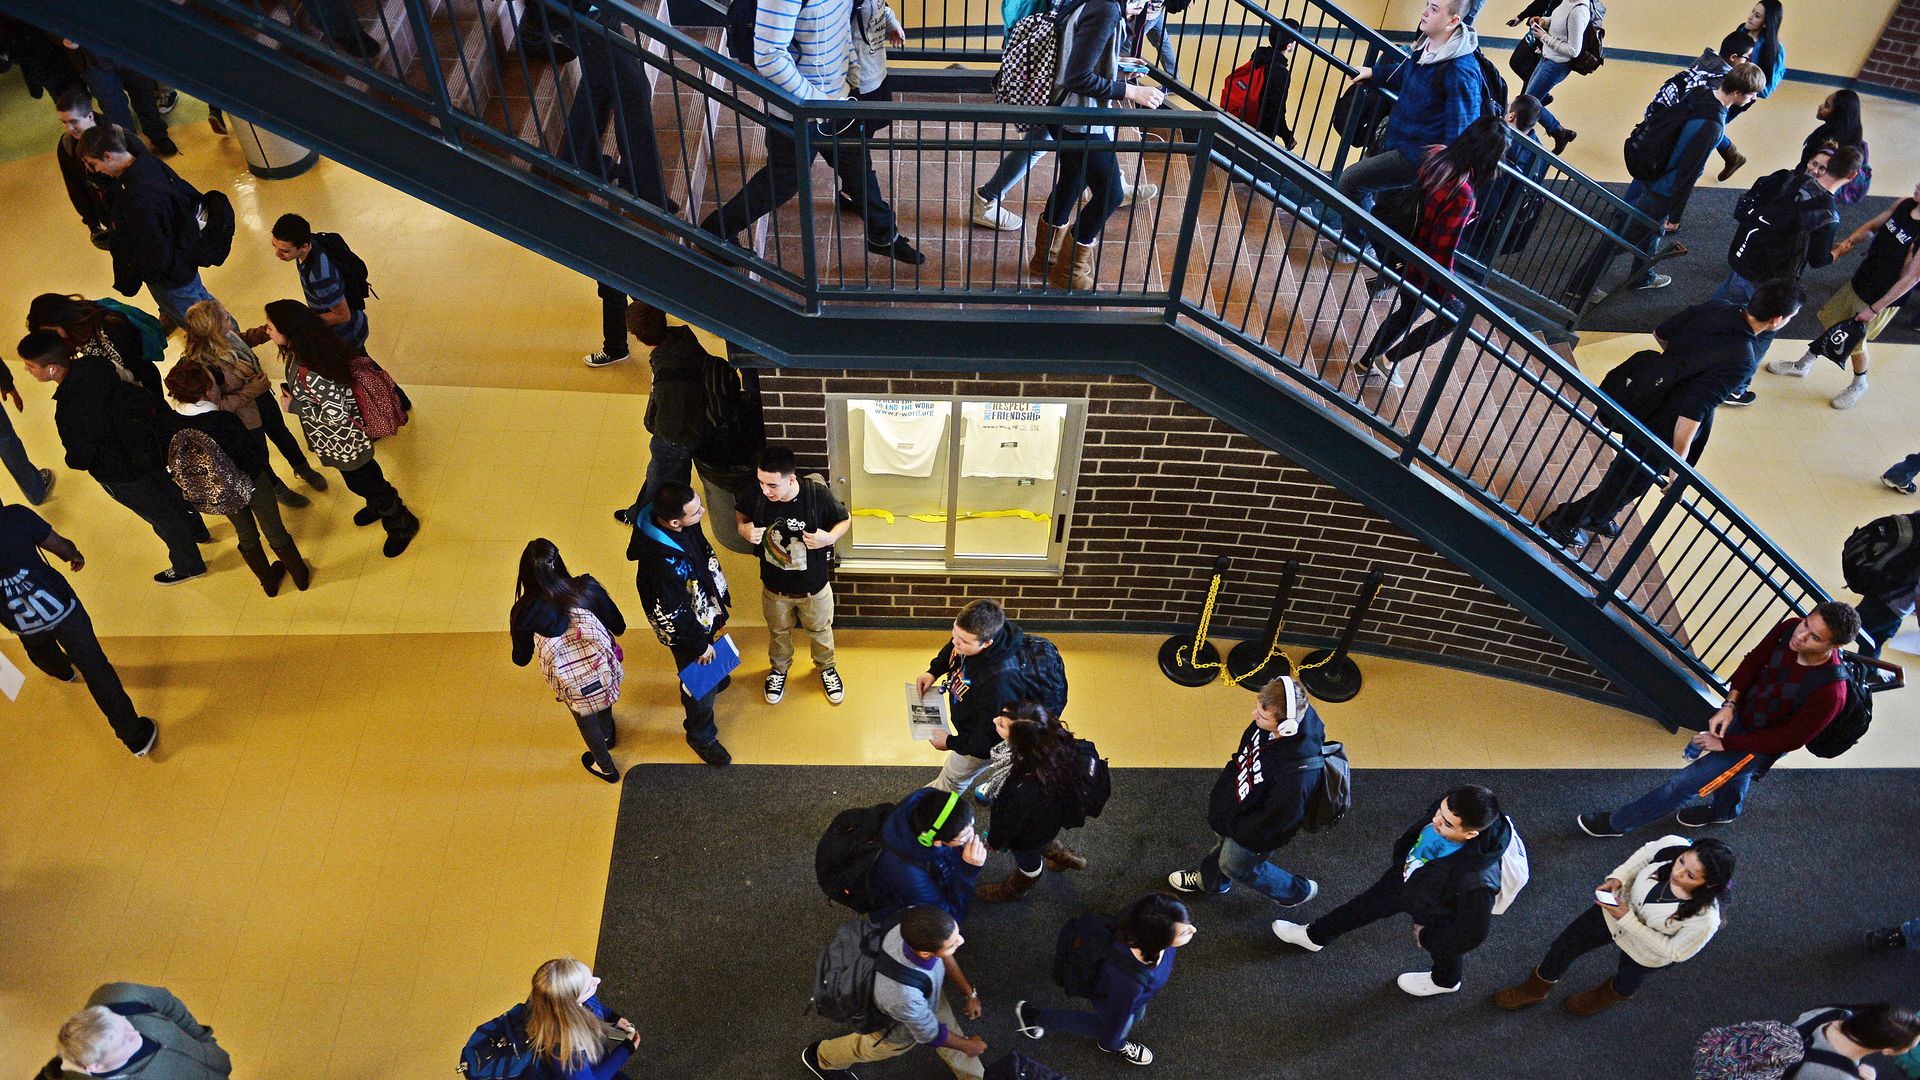 High schoolers walking in the hallway of their school